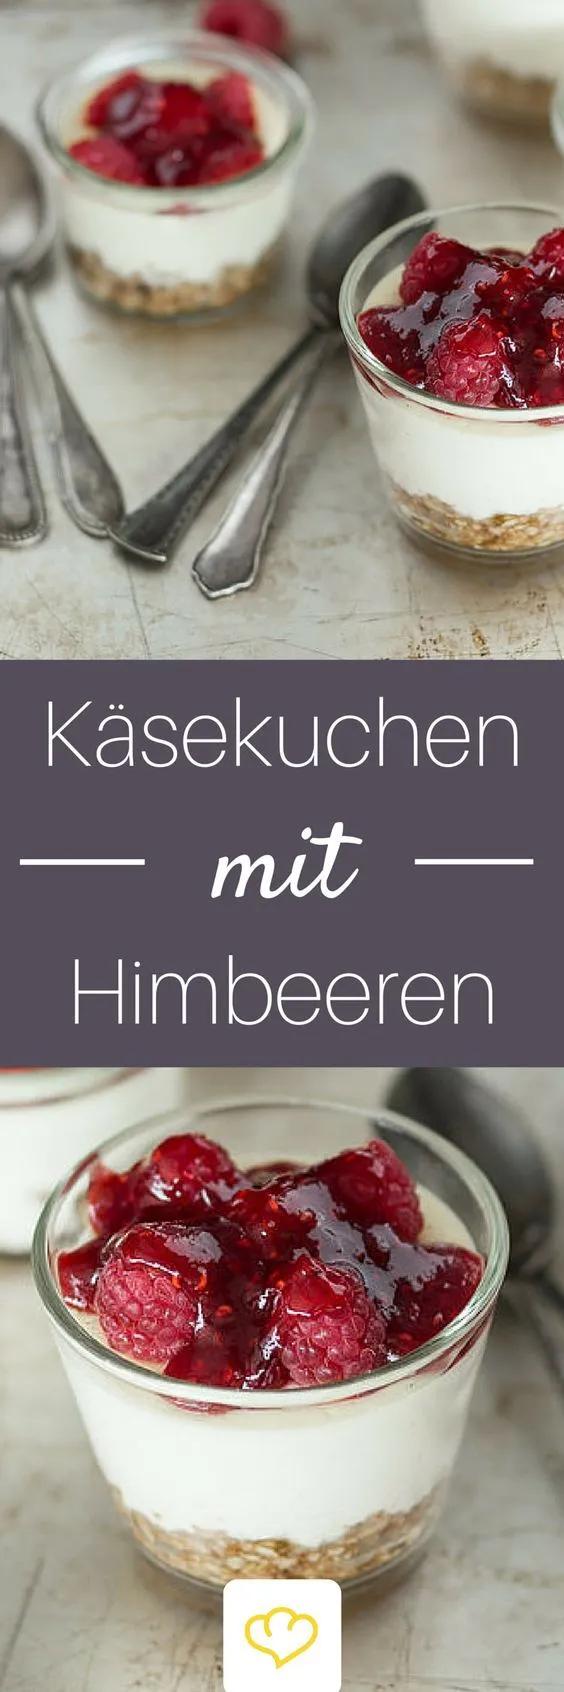 Himbeer-Käsekuchen im Glas | Rezept | Käsekuchen mit himbeeren ...